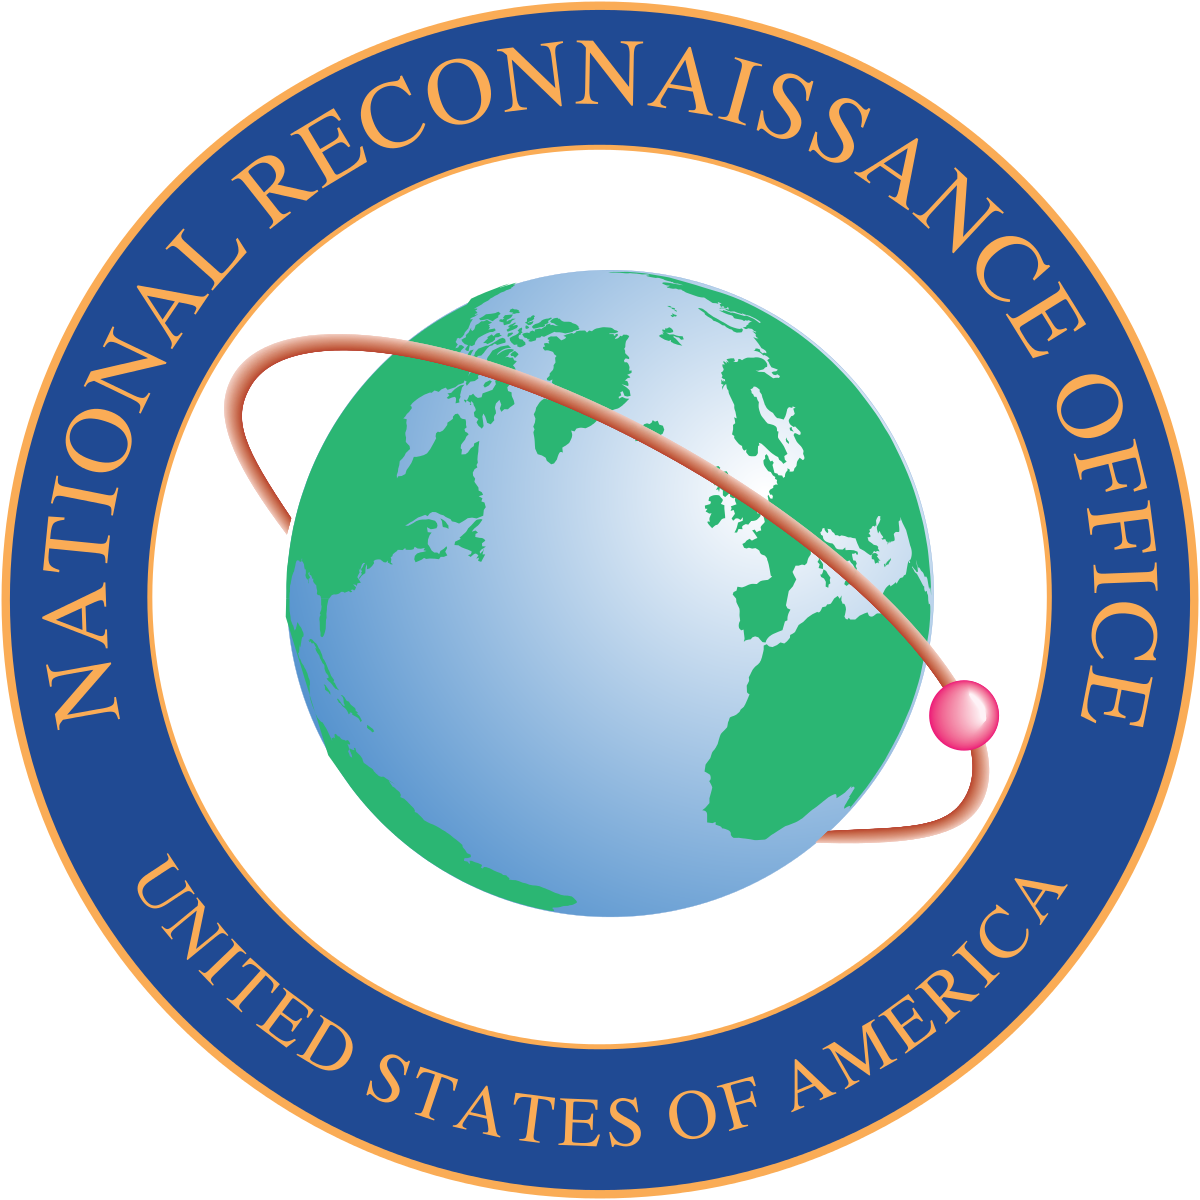 National Reconnaissance Office - National Reconnaissance Office Seal (1200x1200)